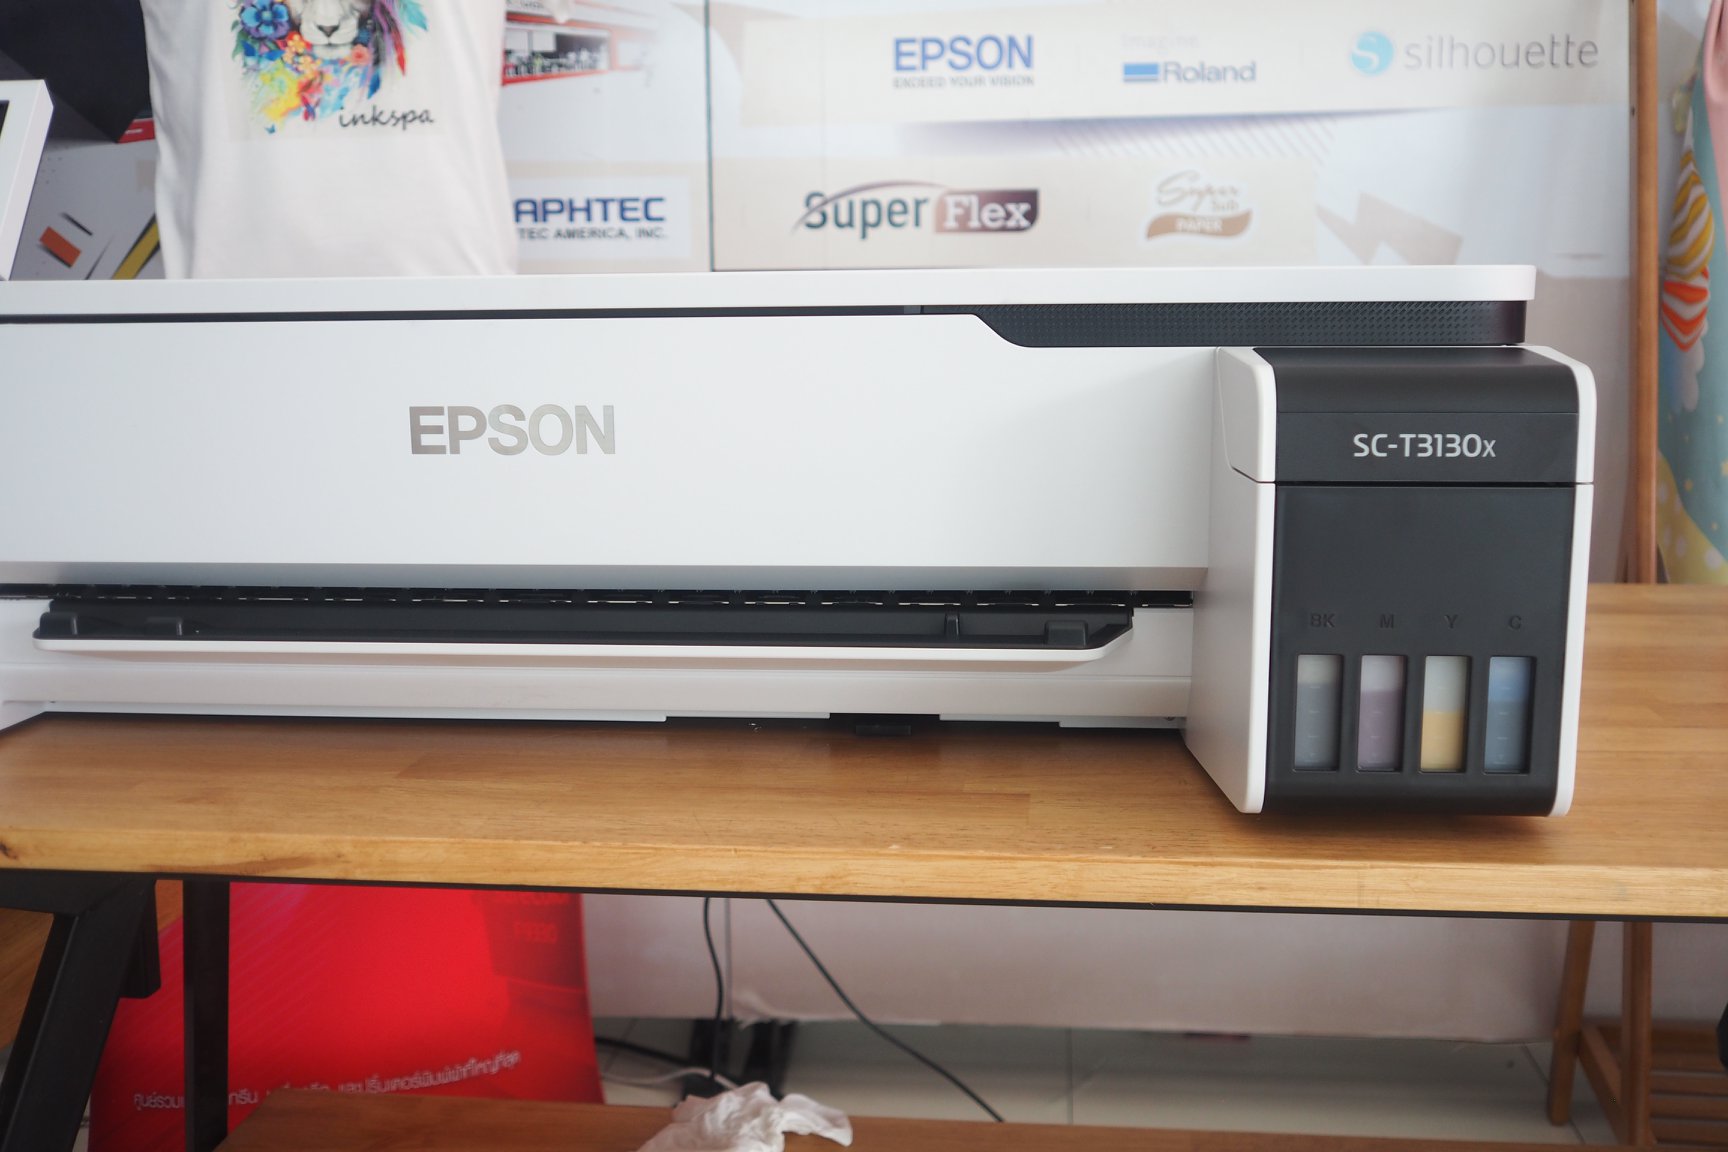 epson t3130x, เครื่องพิมพ์ซับ , เครื่องสกรีน ,เครื่องพิมพ์เสื้อ,เครื่องพิมพ์ตั้งโต๊ะ , เครื่องพิมพ์เอ1, t3100x , เครื่องพิมพ์หน้ากว้าง , ปริ้นเตอร์ซับลิเมชั่น, Epson T3130 sublimation